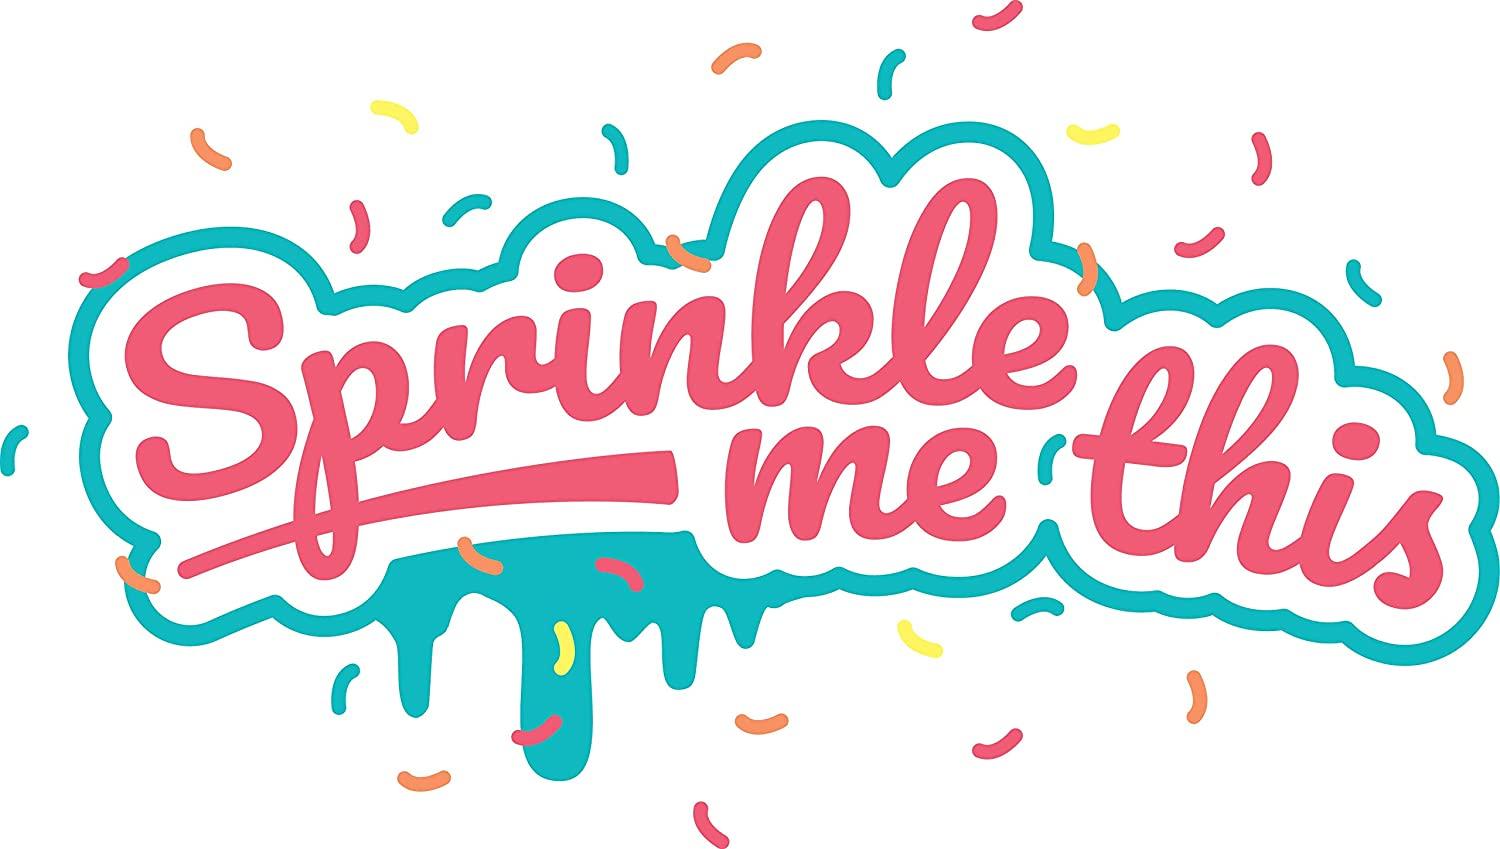 Sprinkles Birthday Cake Sprinkle Mix 8 Oz, Edible Decorations